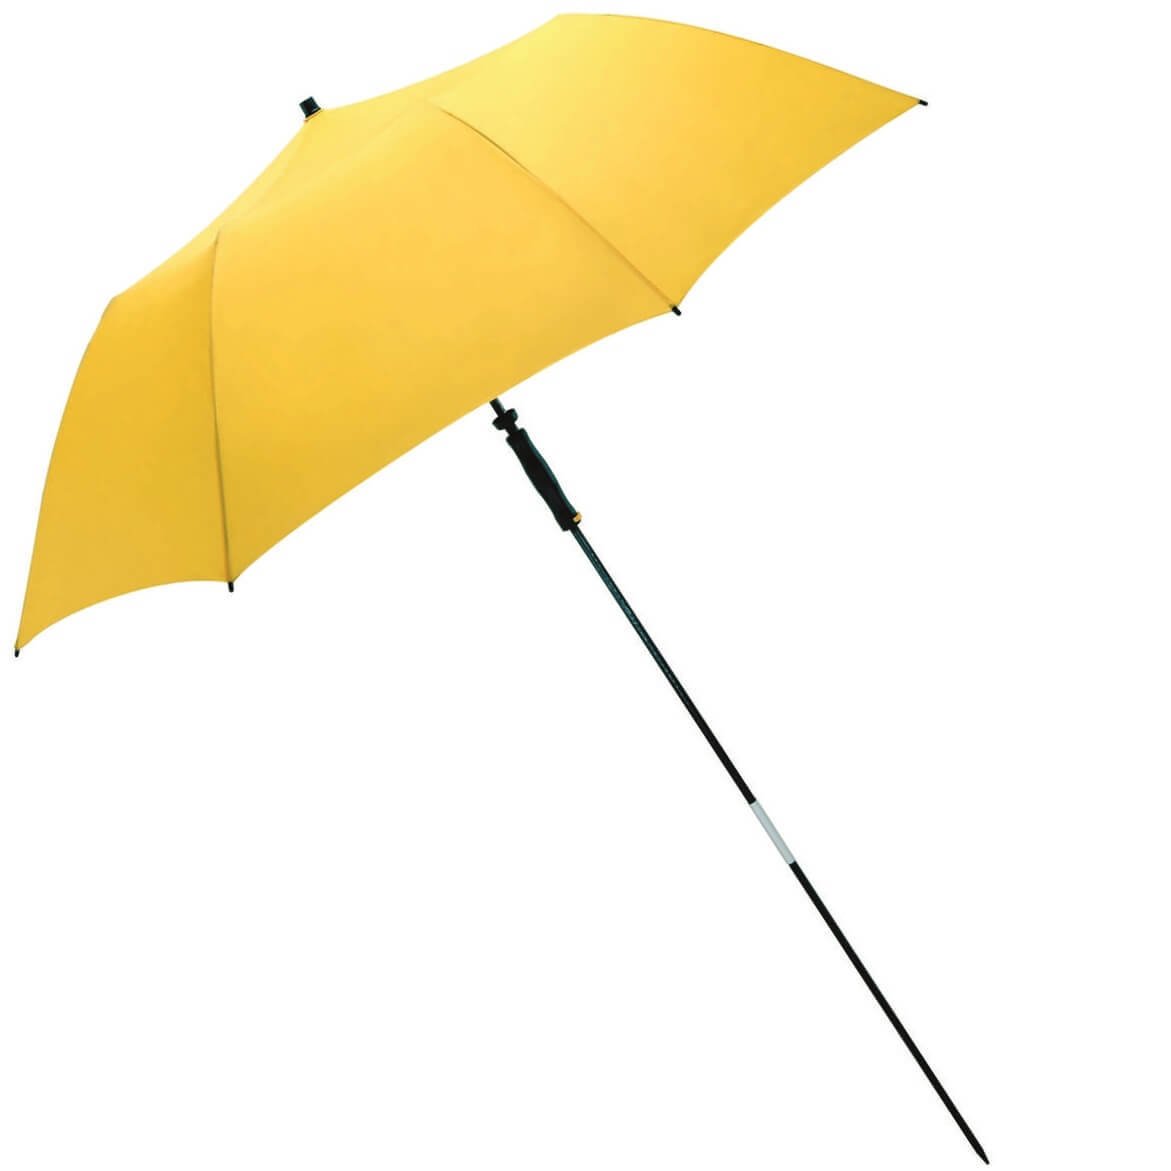 Picnic umbrellas from sun and rain CAMPY